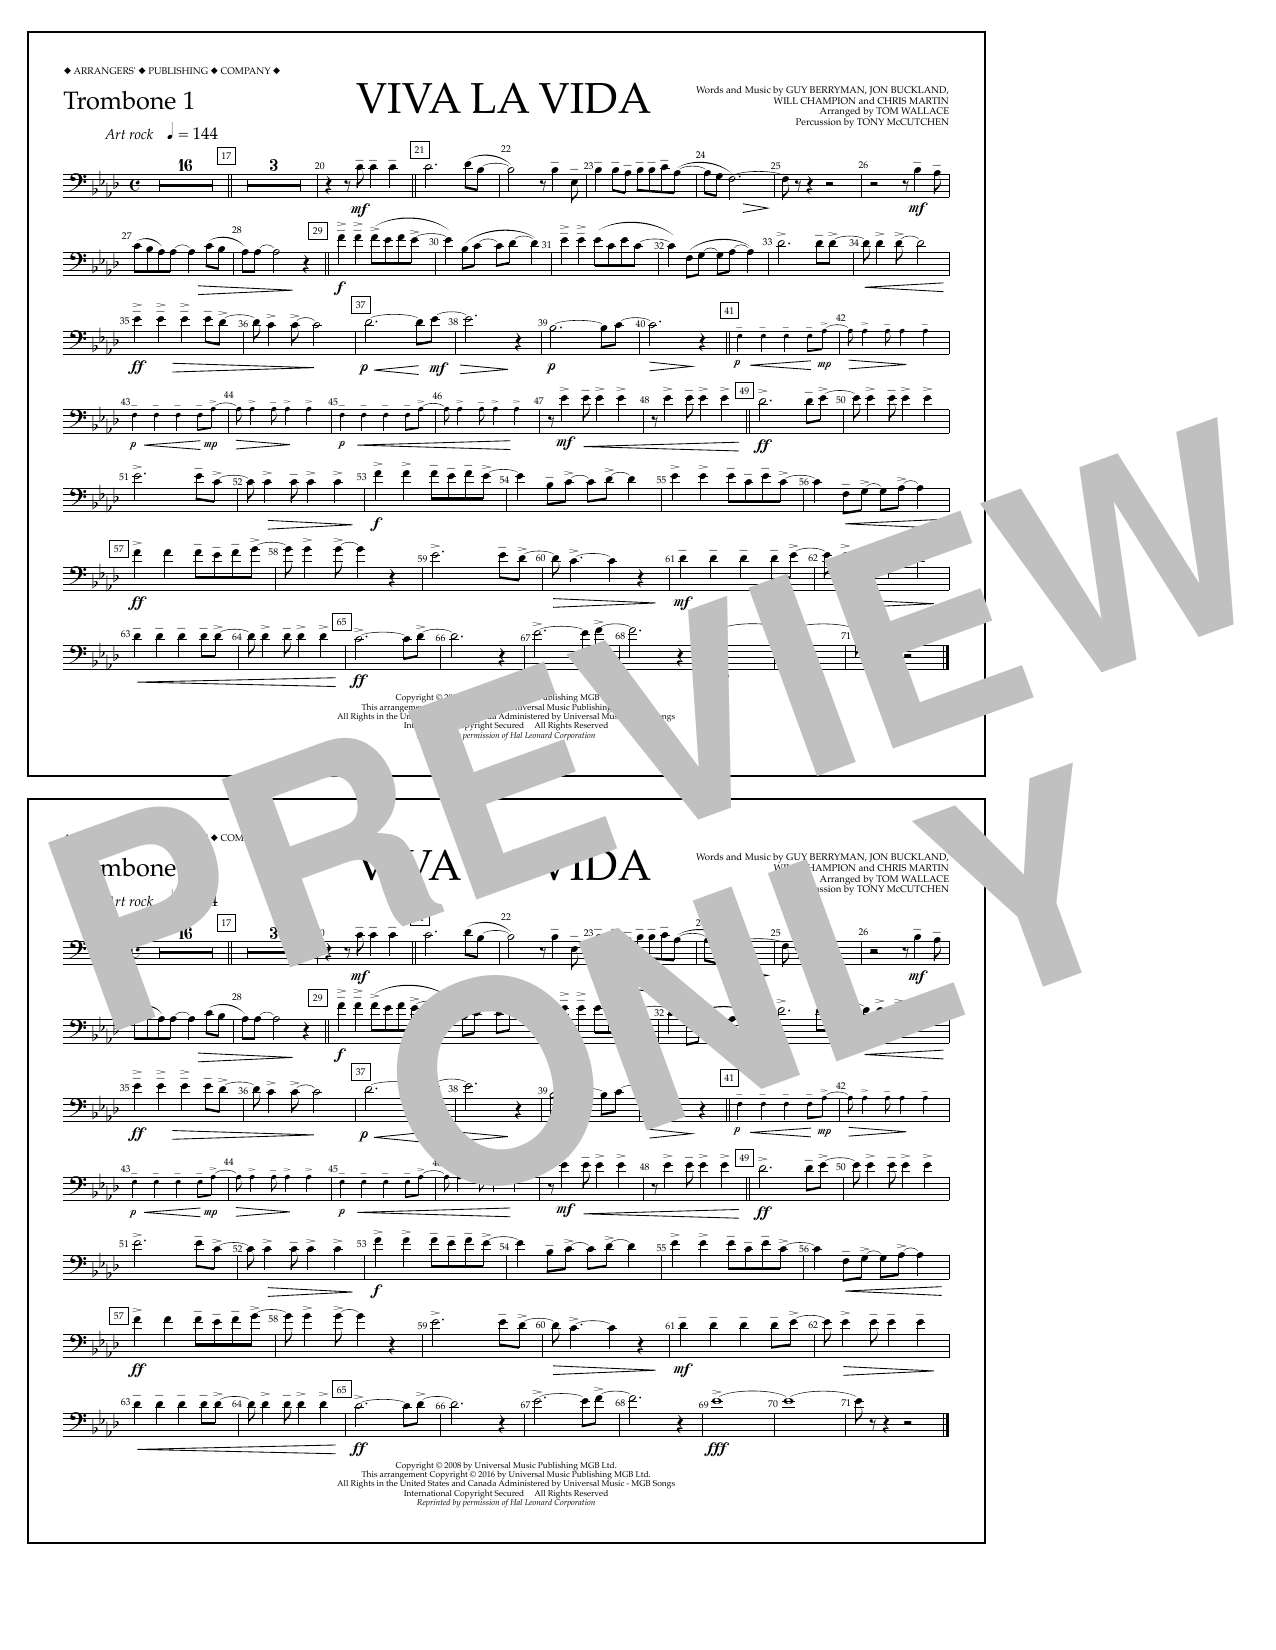 Tom Wallace Viva La Vida - Trombone 1 Sheet Music Notes & Chords for Marching Band - Download or Print PDF